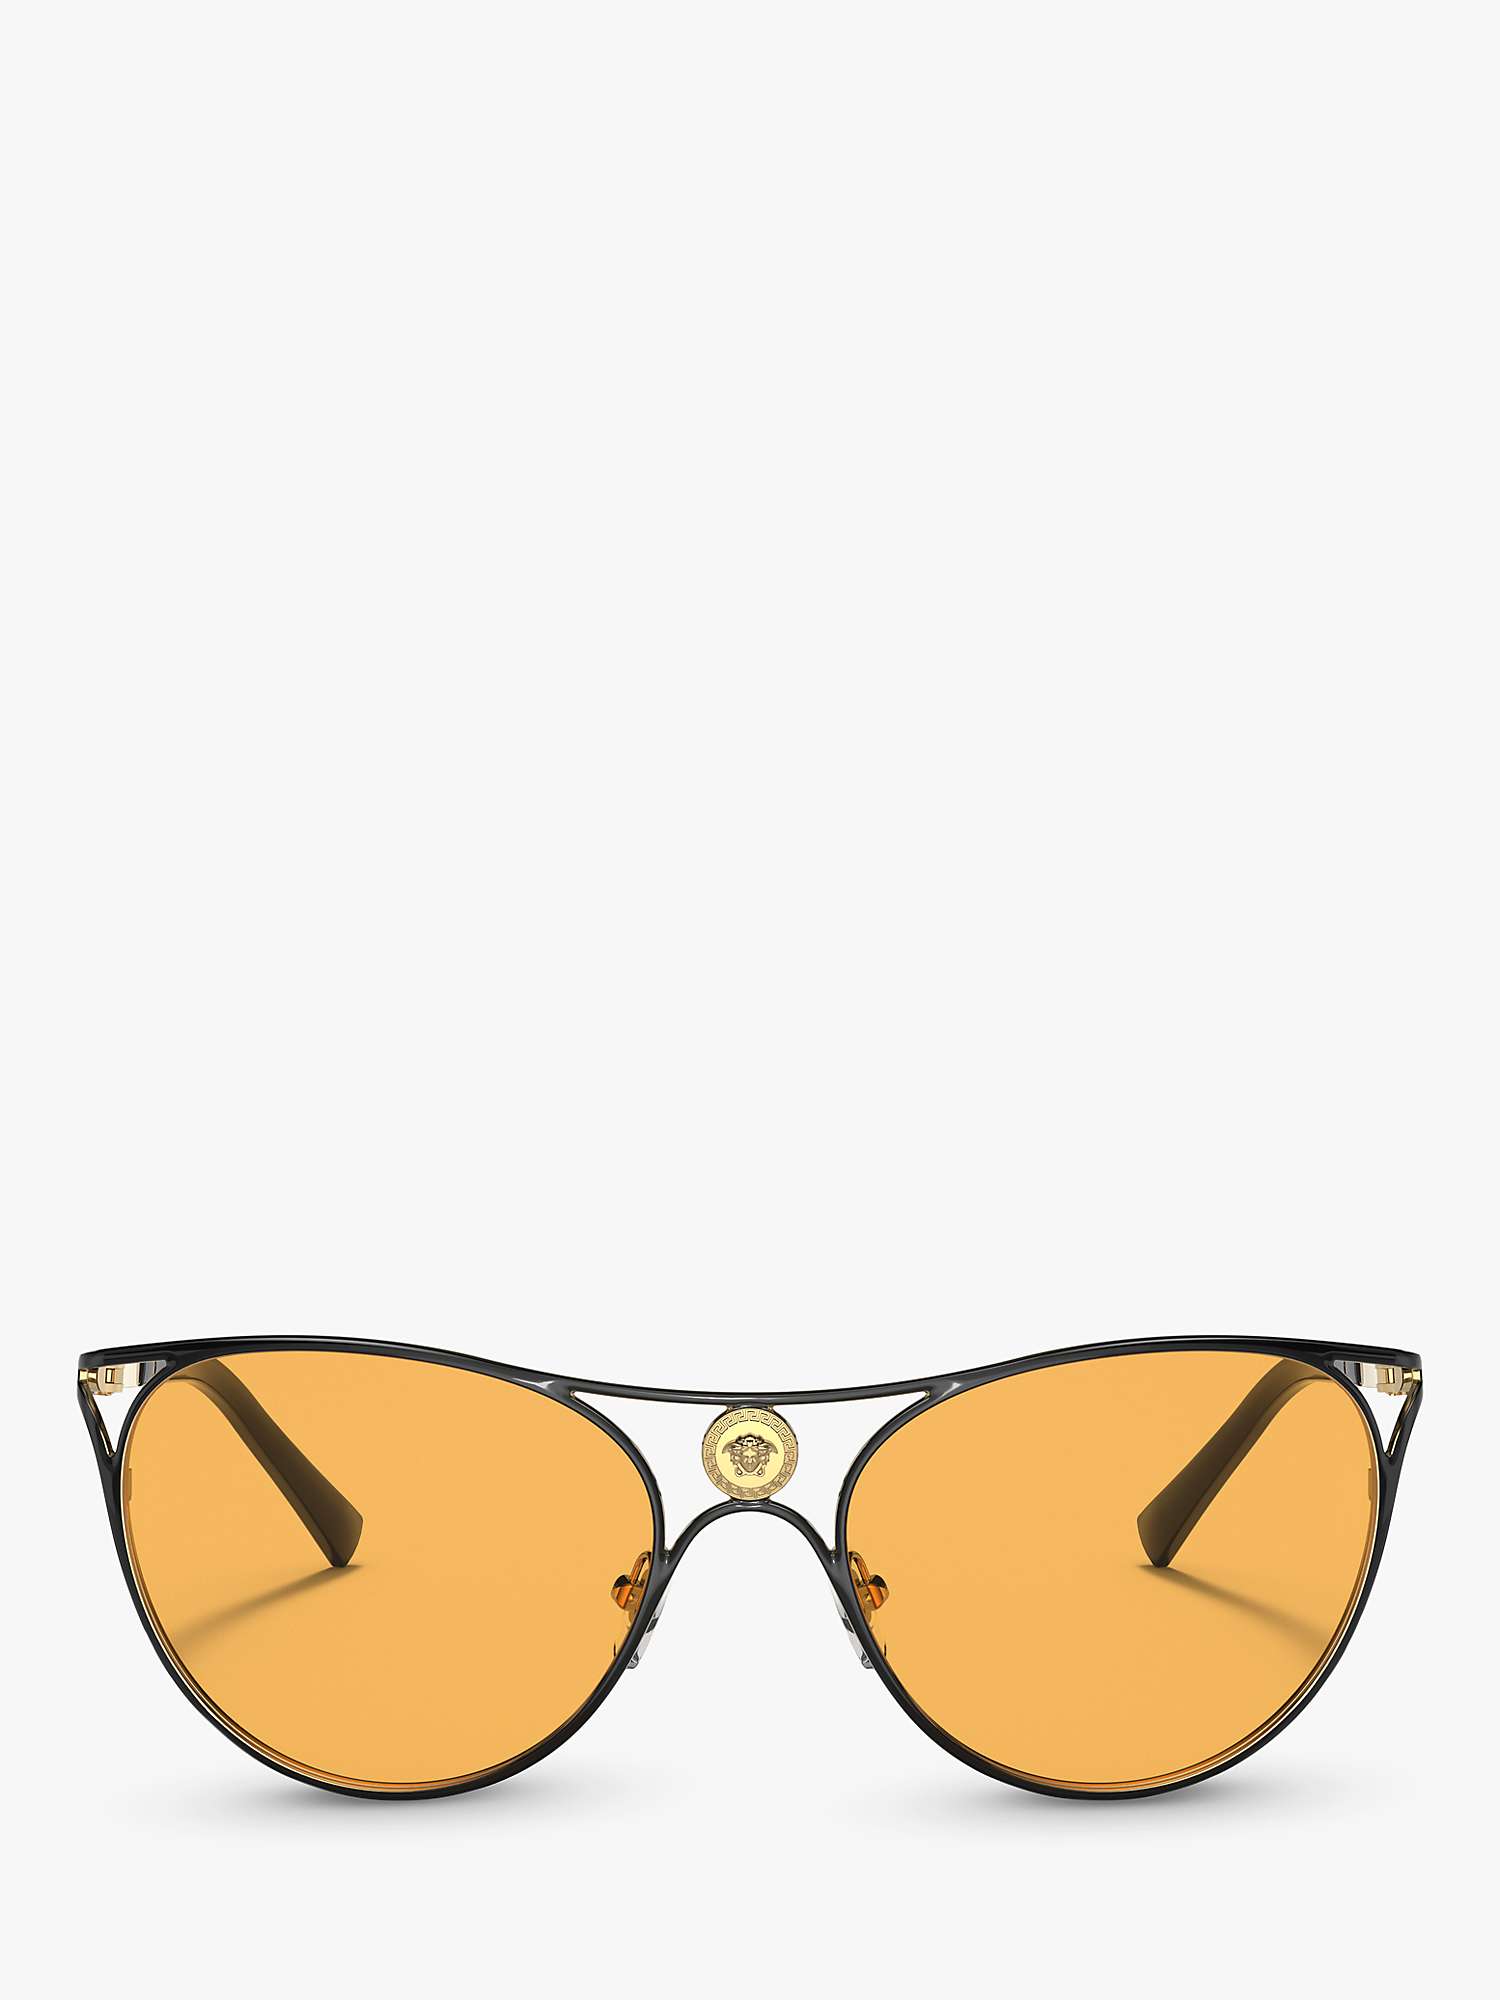 Buy Versace VE2237 Women's Cat's Eye Sunglasses, Black/Orange Online at johnlewis.com